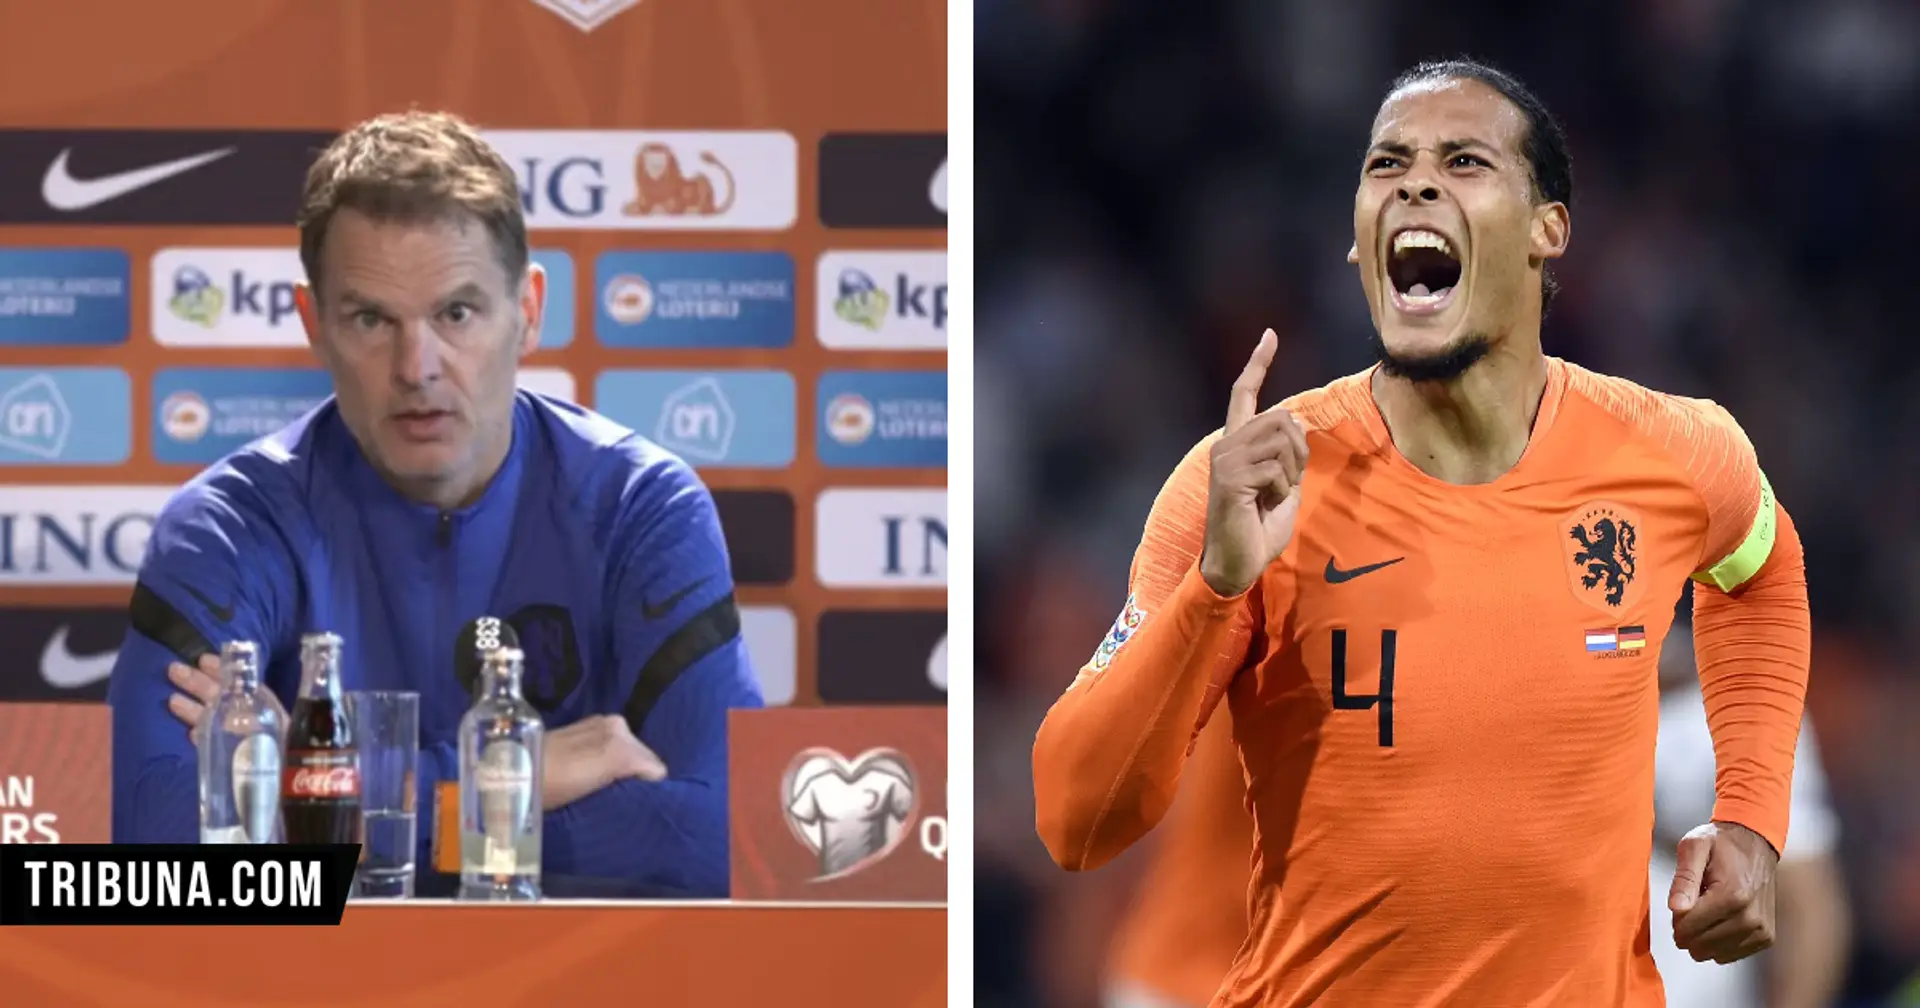 'I'm not counting on him': Netherlands boss De Boer on Van Dijk's Euro 2021 chances